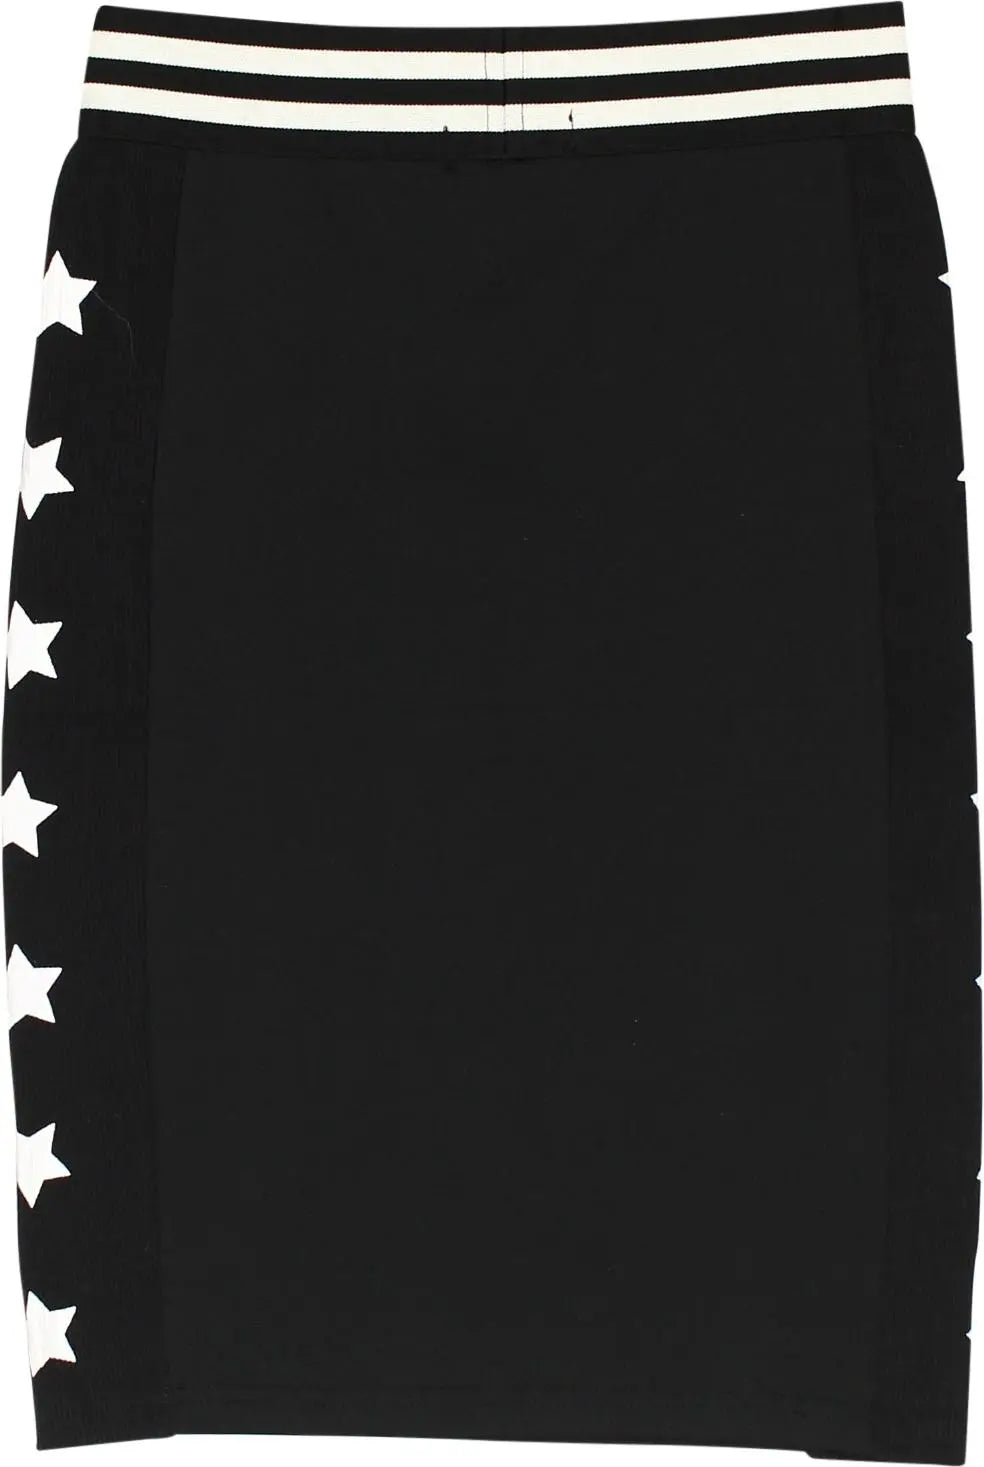 Wibra - Black Skirt- ThriftTale.com - Vintage and second handclothing